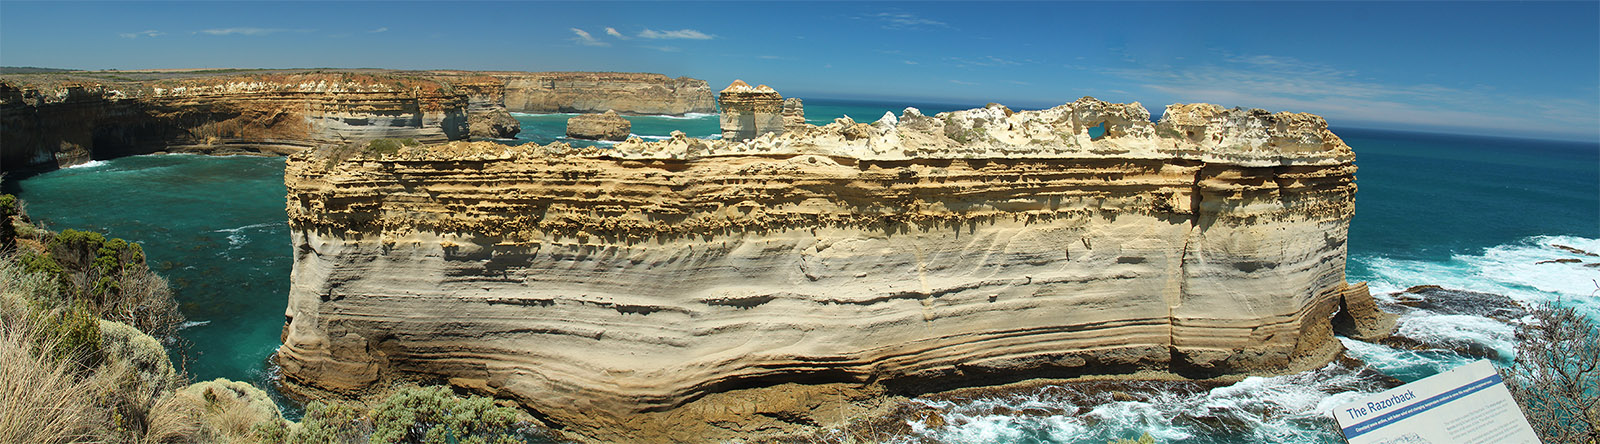 Razorback panorama